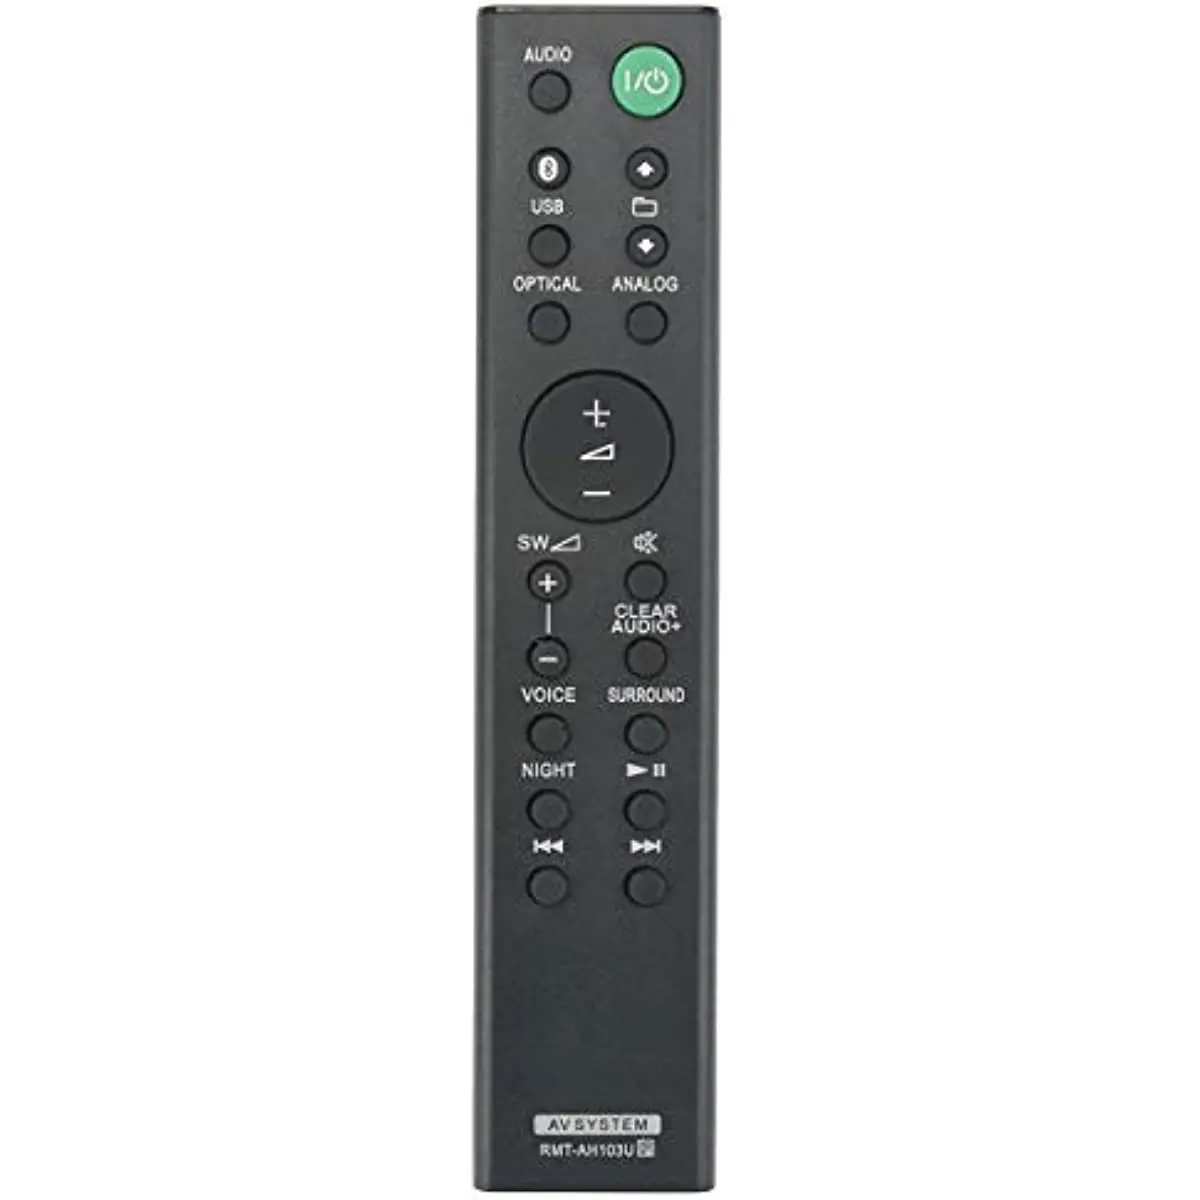 

RMT-AH103U Replacement Soundbar Remote Control Applicable for Sony Soundbar HT-CT80 SA-CT80 HTCT80 SACT80